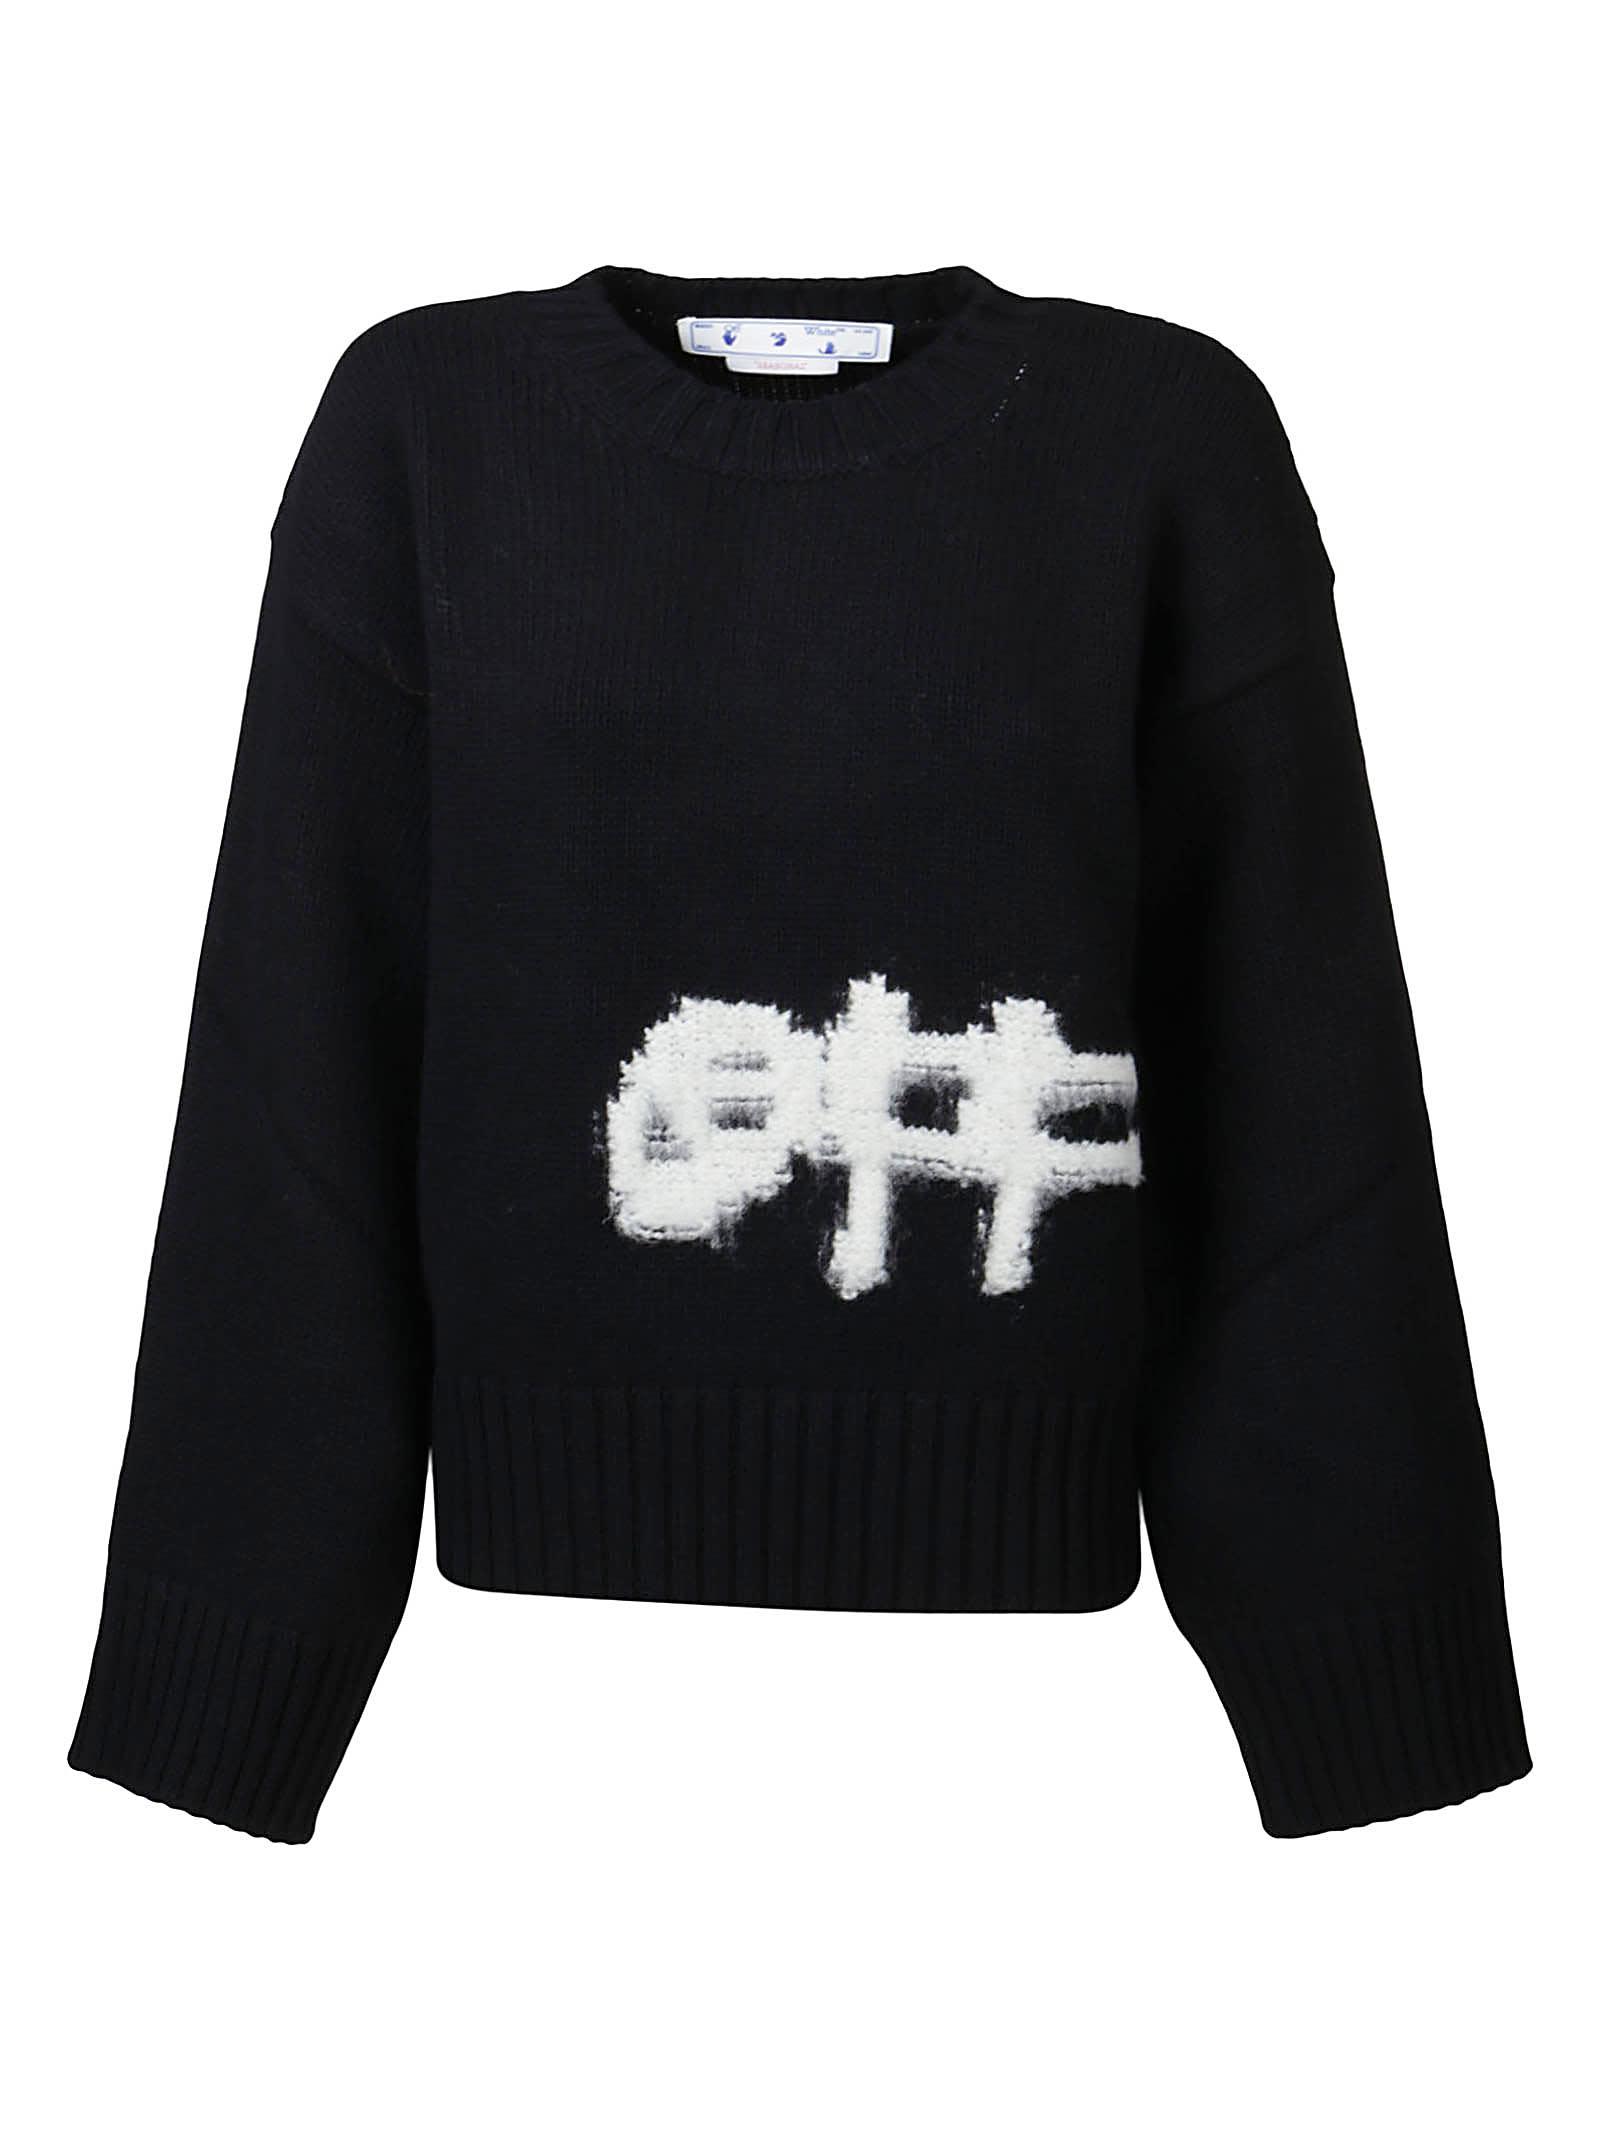 Off-White c/o Virgil Abloh Wool Logo Intarsia Sweater in Black White  (Black) - Save 43% | Lyst